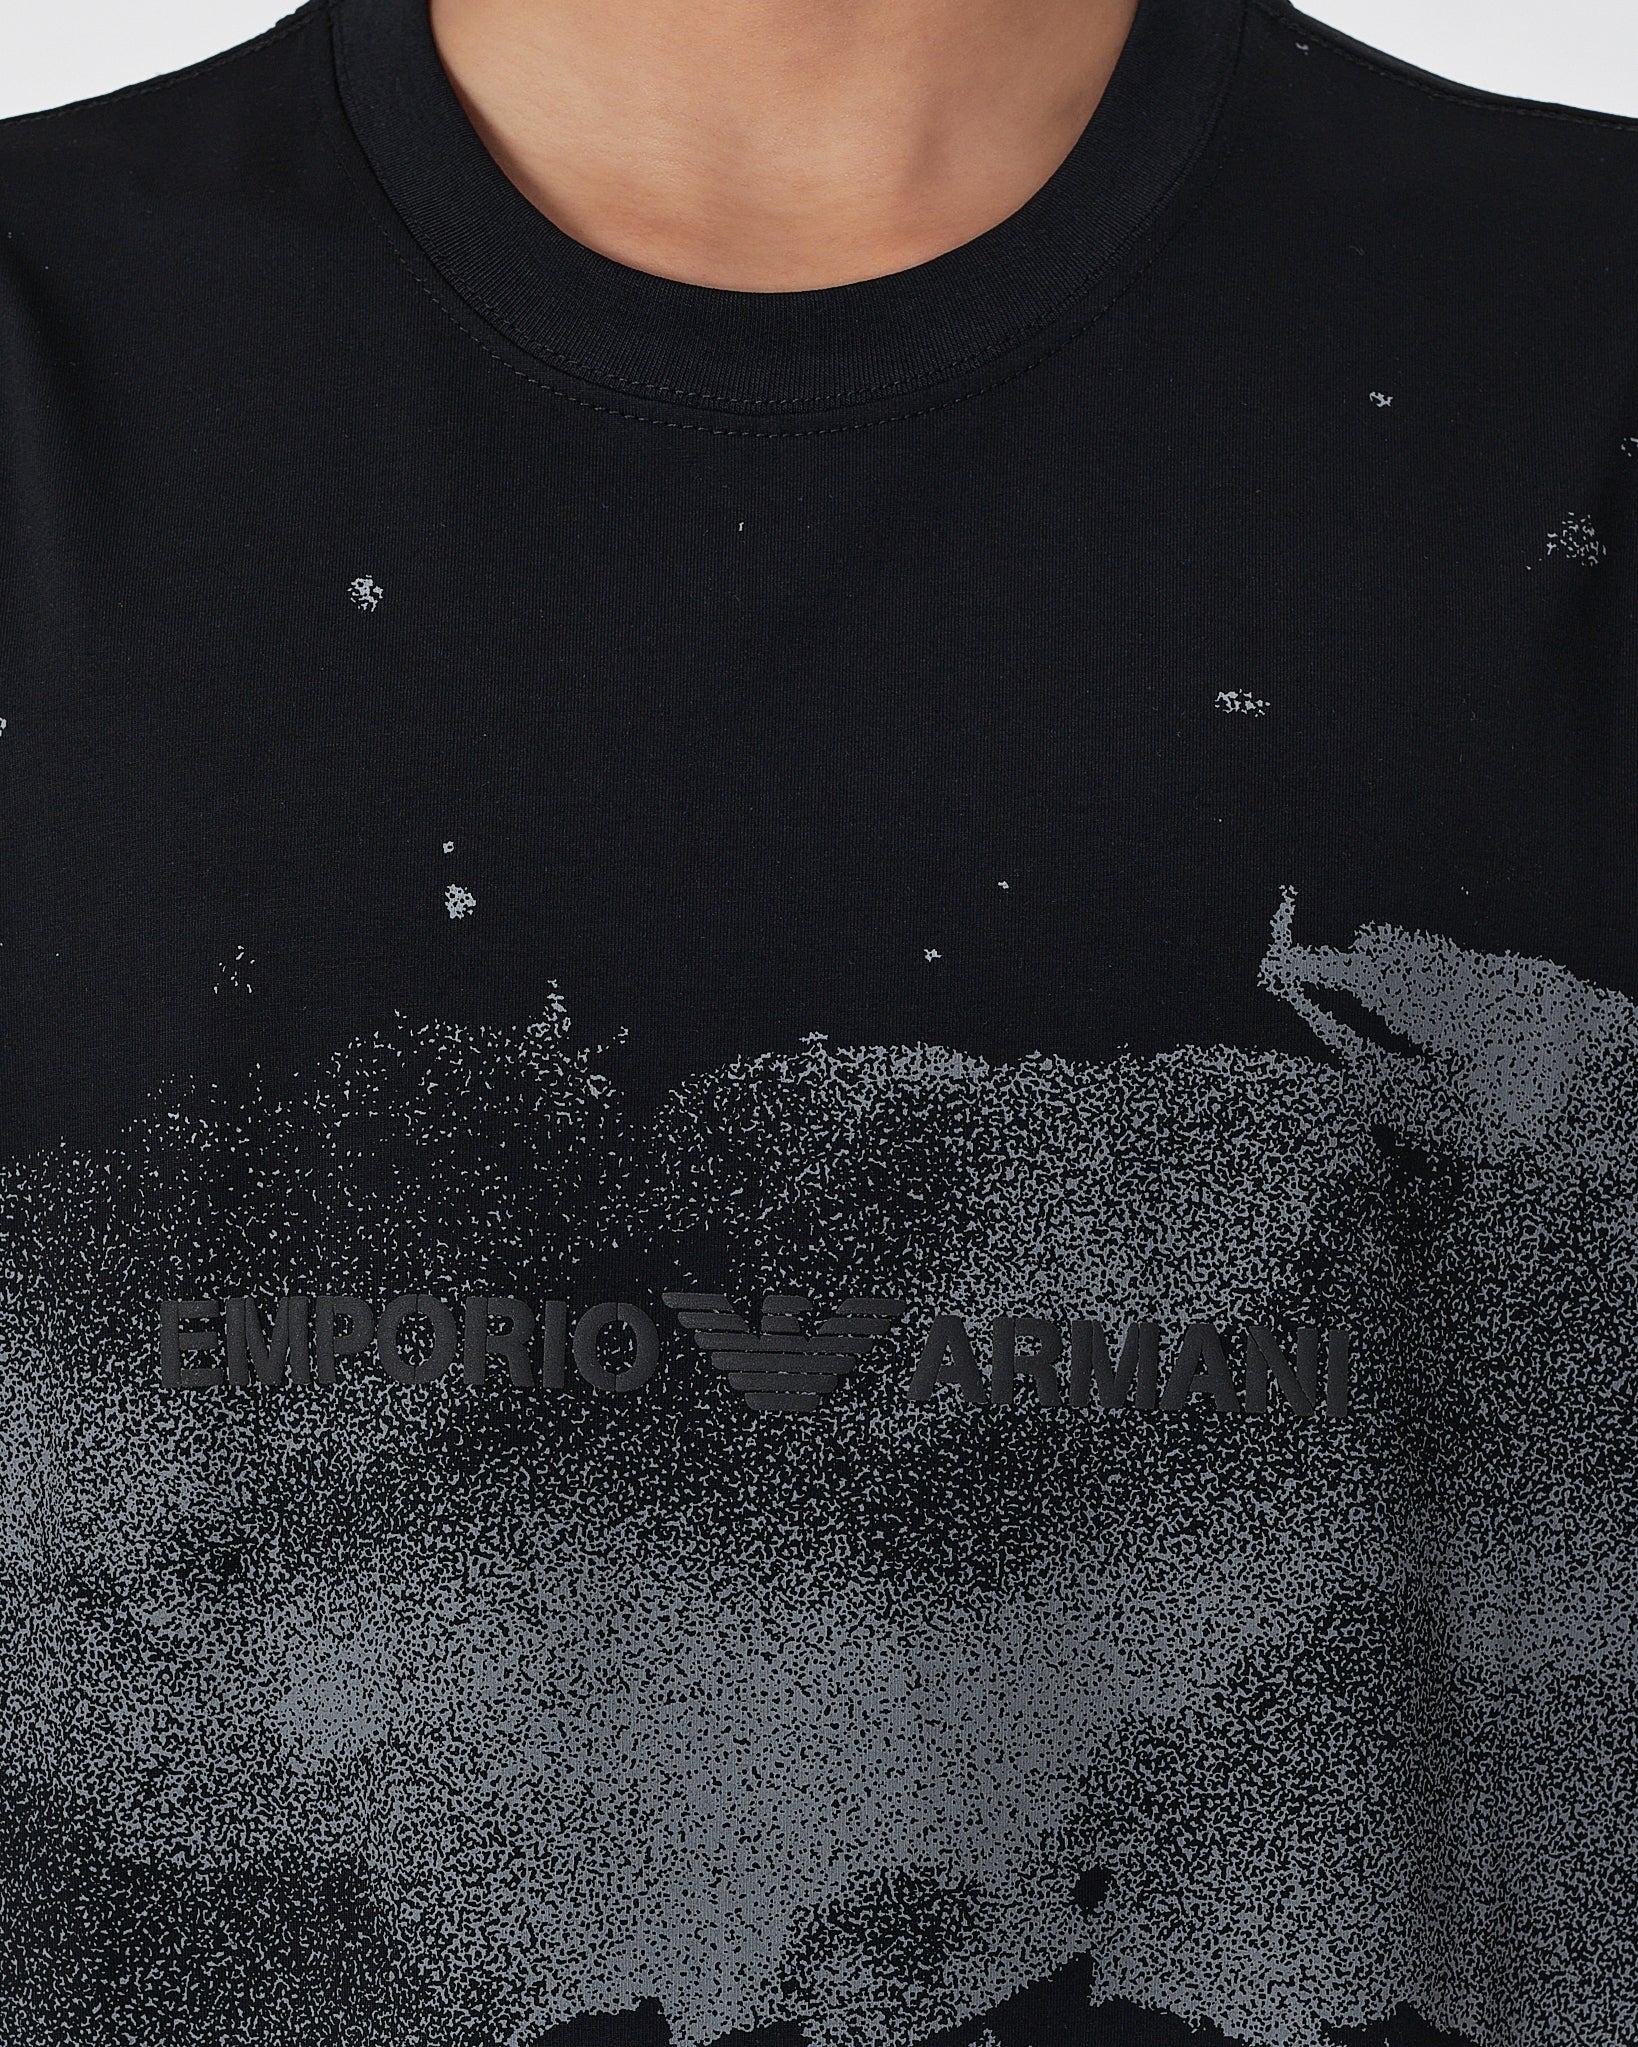 ARM Ink Splatter Printed Men Black T-Shirt 15.90